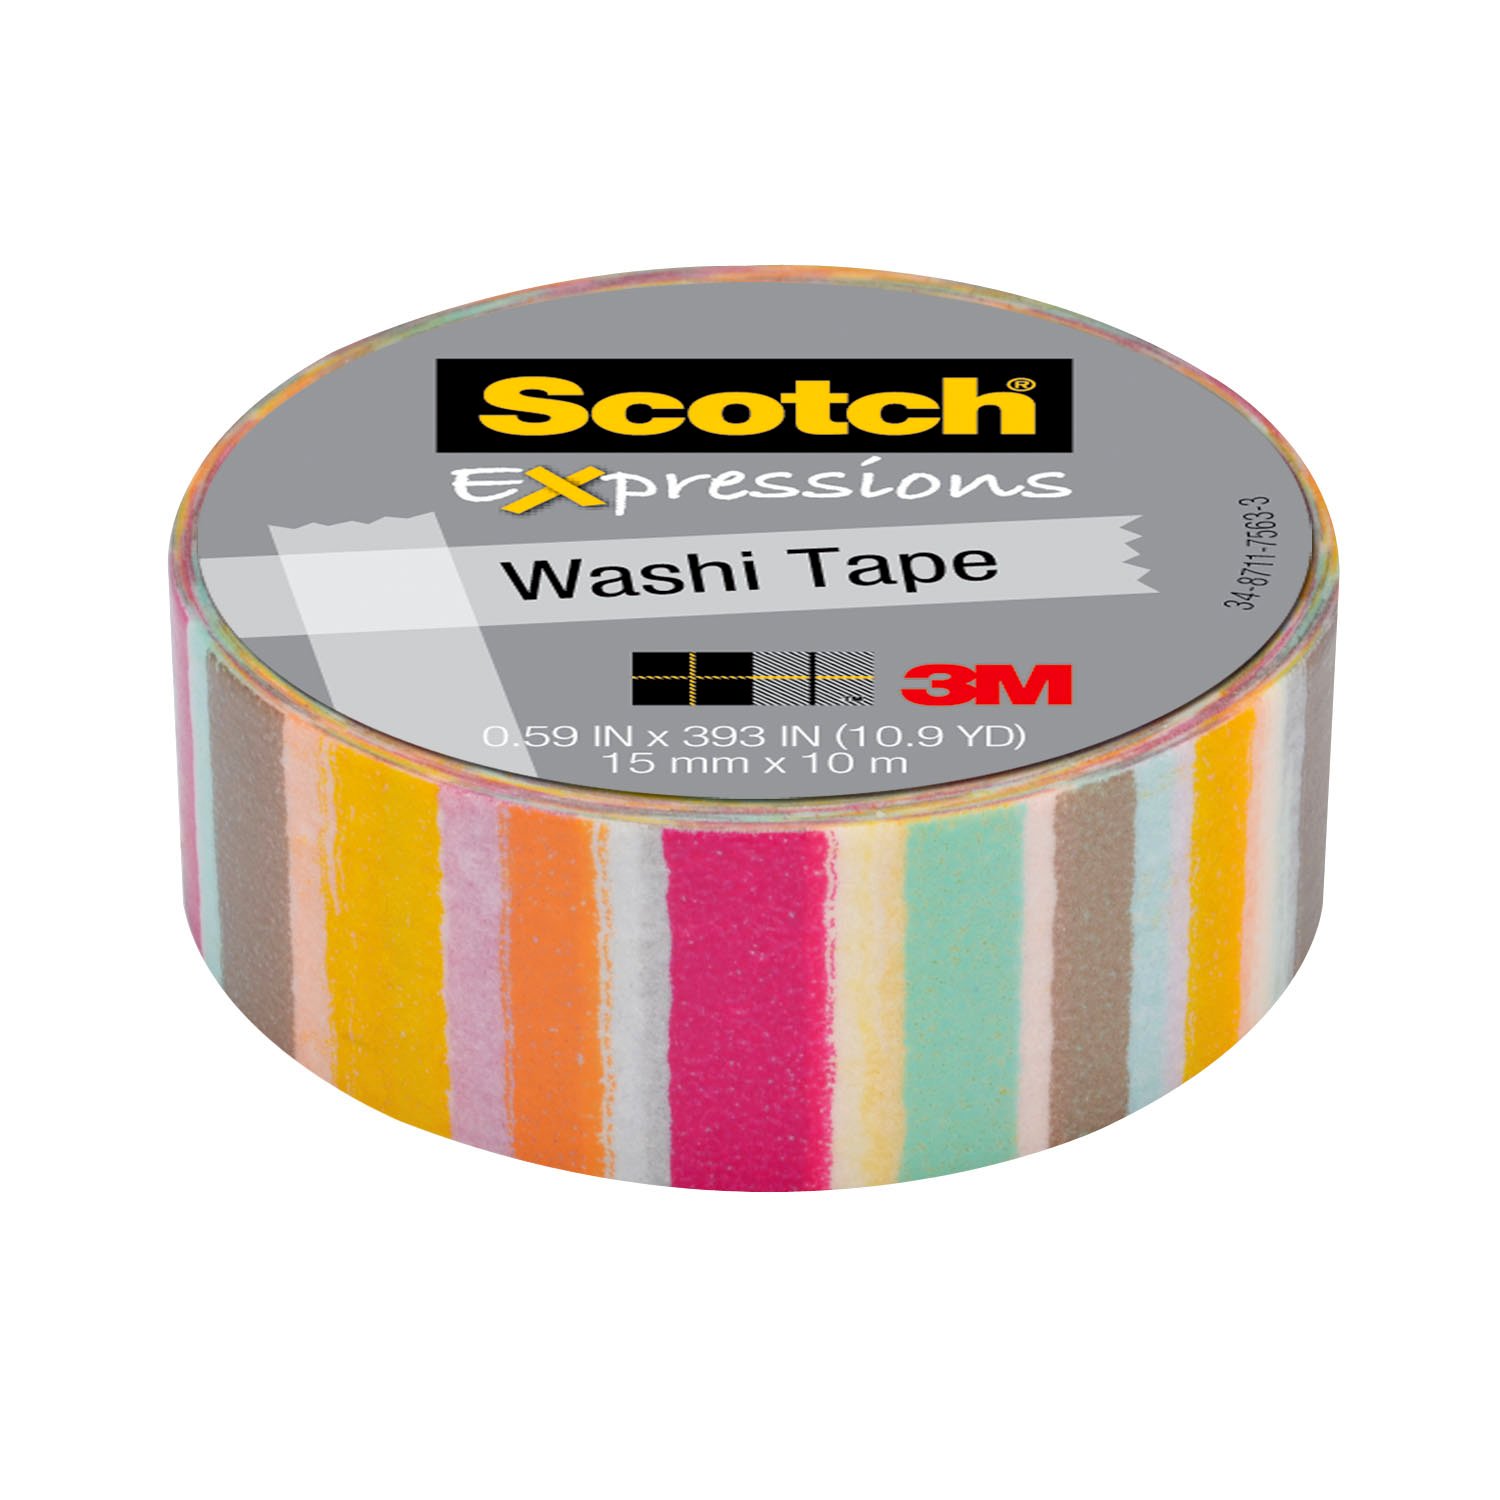 7100020277 - Scotch Expressions Washi Tape C314-P37, .59 in x 393 in (15 mm x 10 m)
Blurred Lines